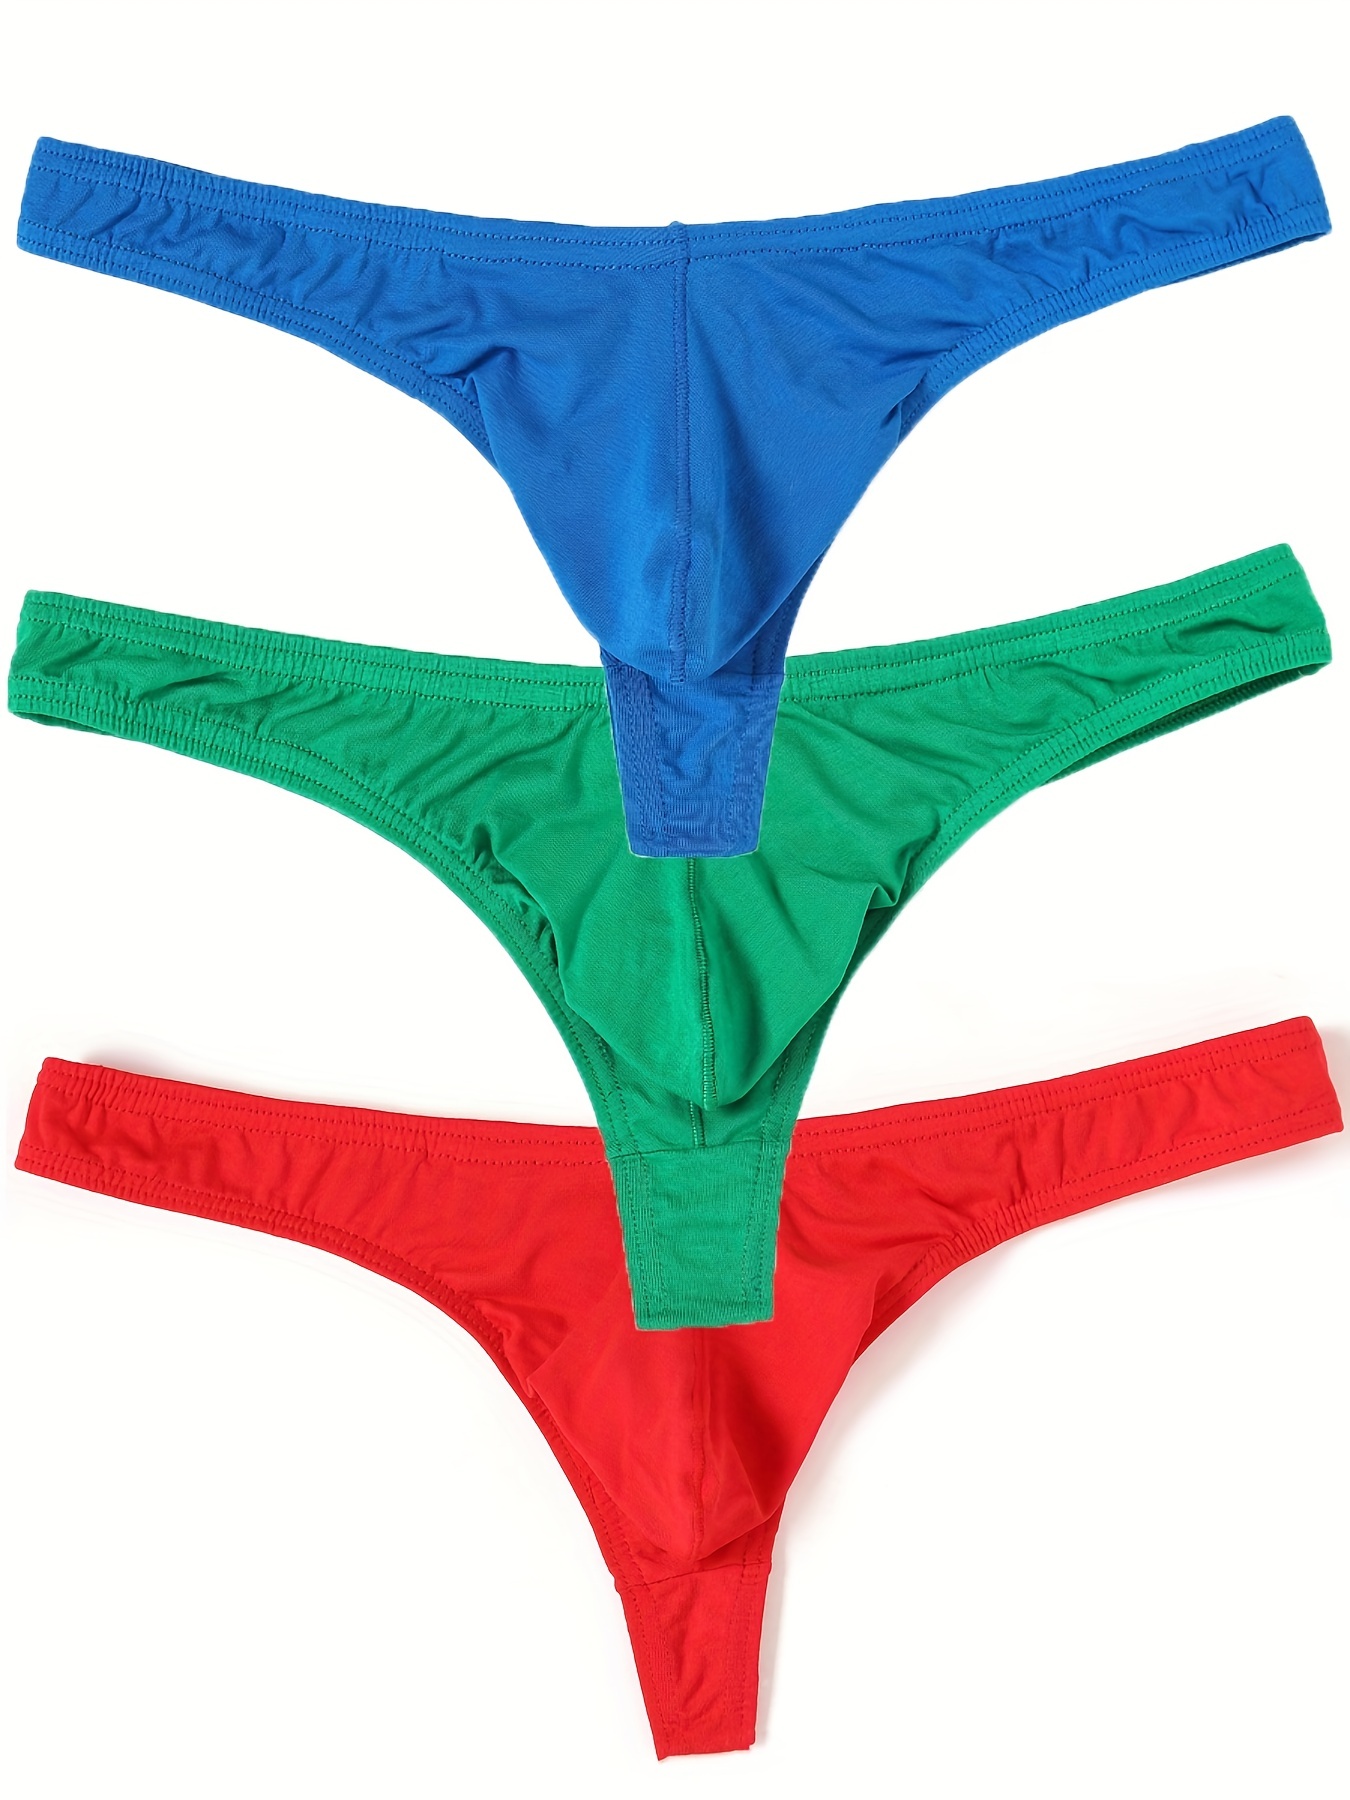 BfM Mens Lowrise Sheer String Bikini Underwear